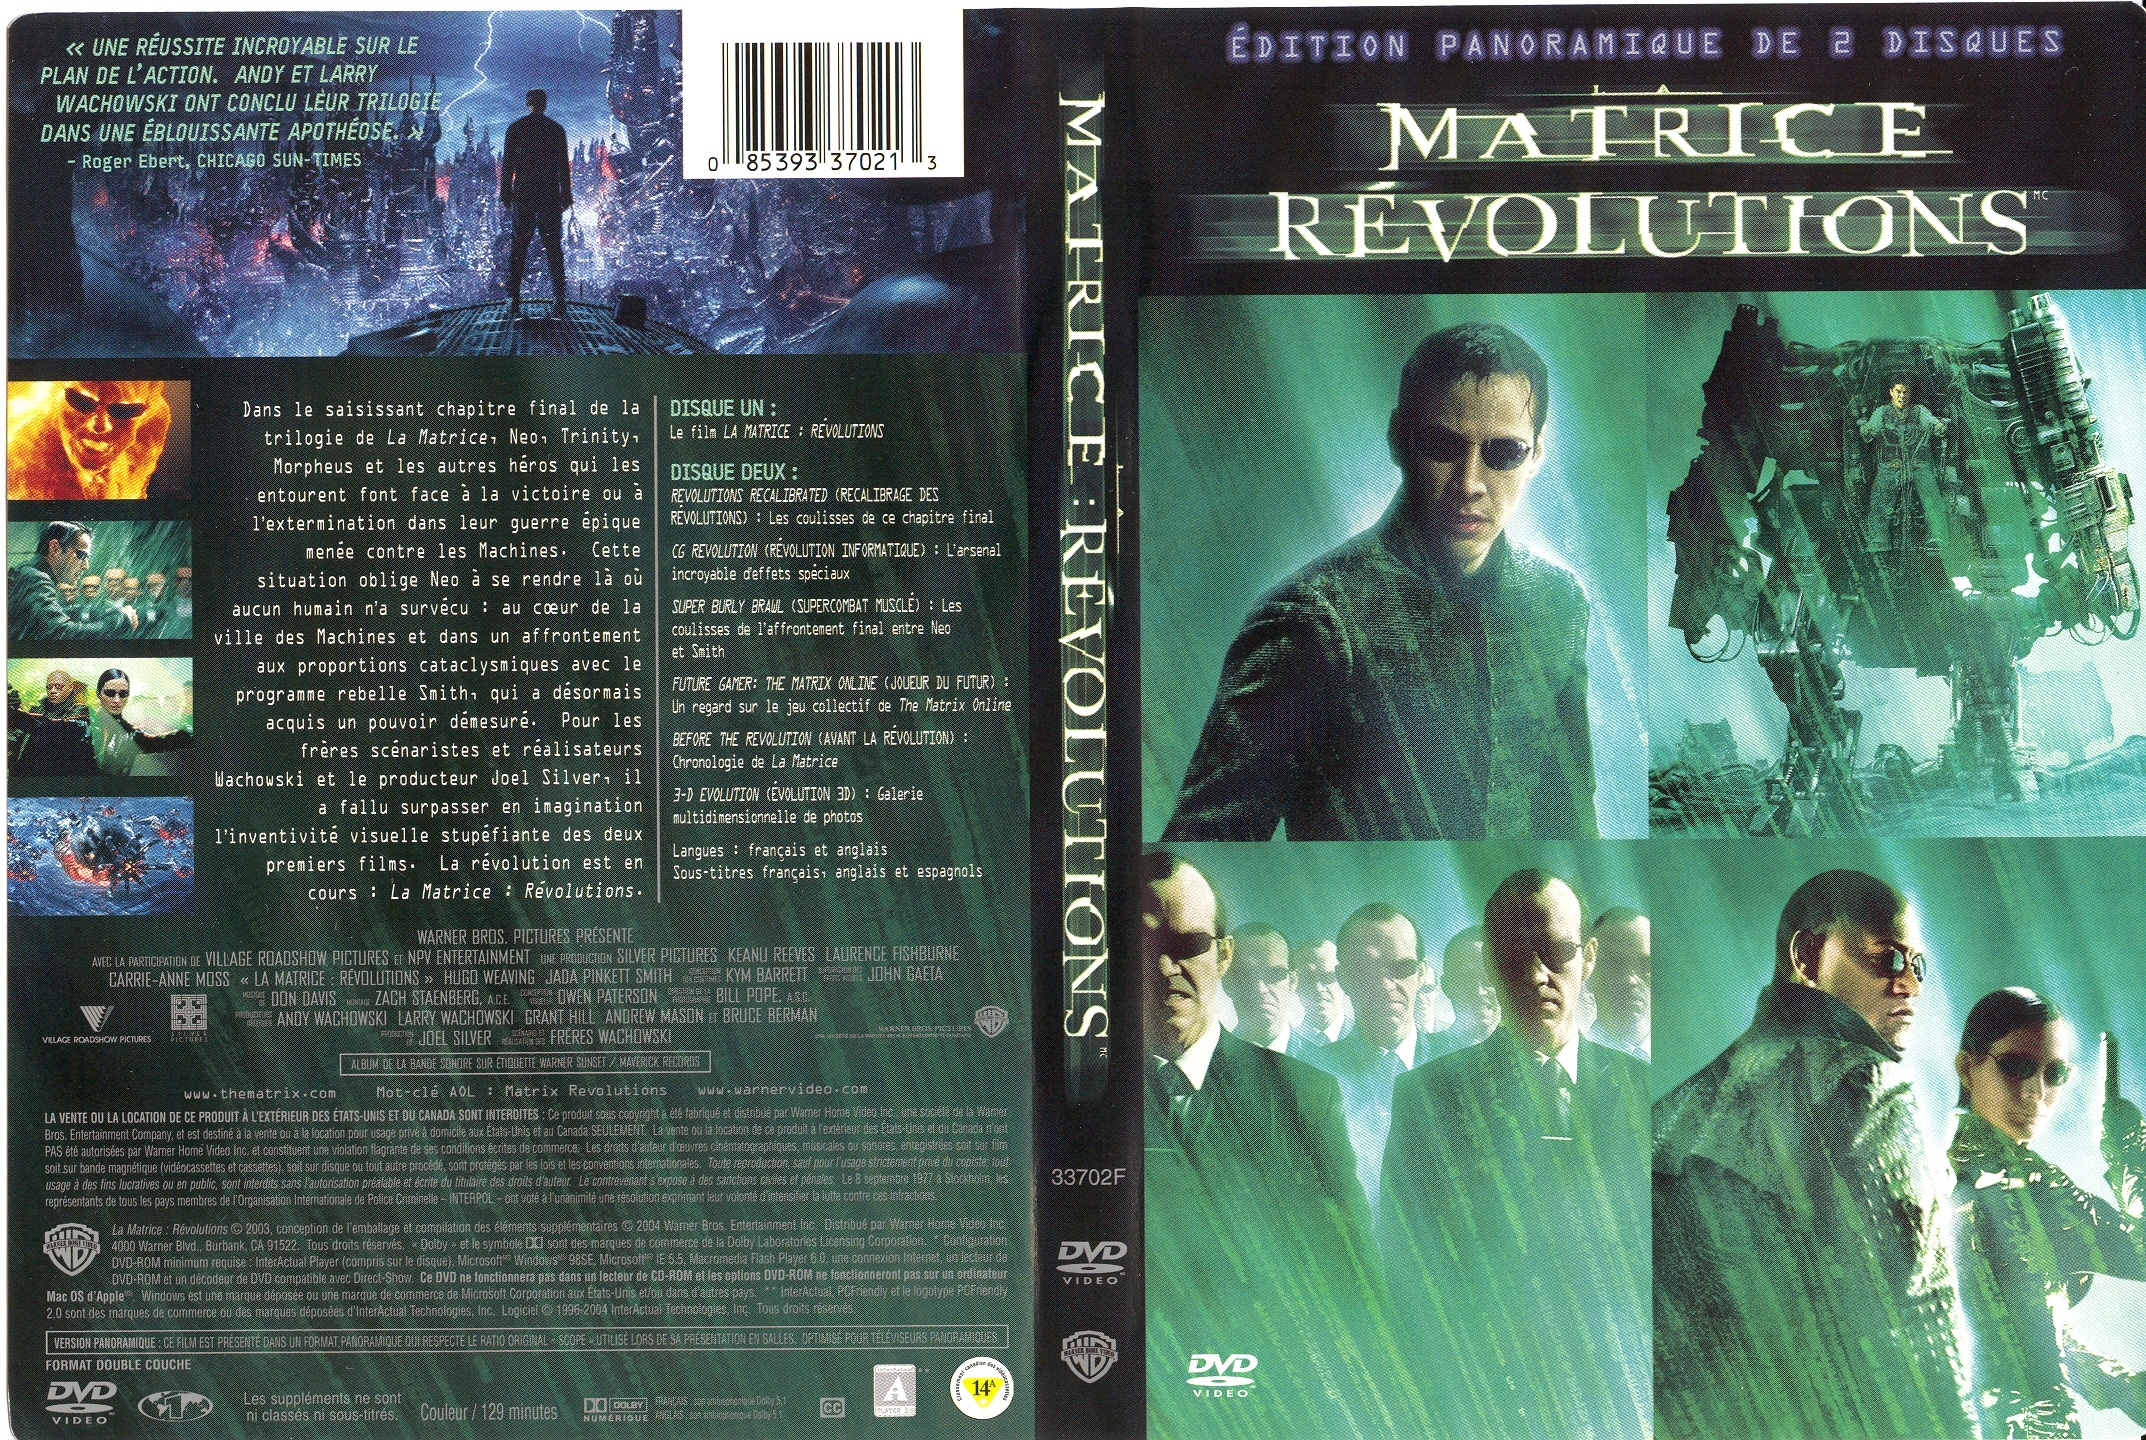 Jaquette DVD Matrice rvolutions